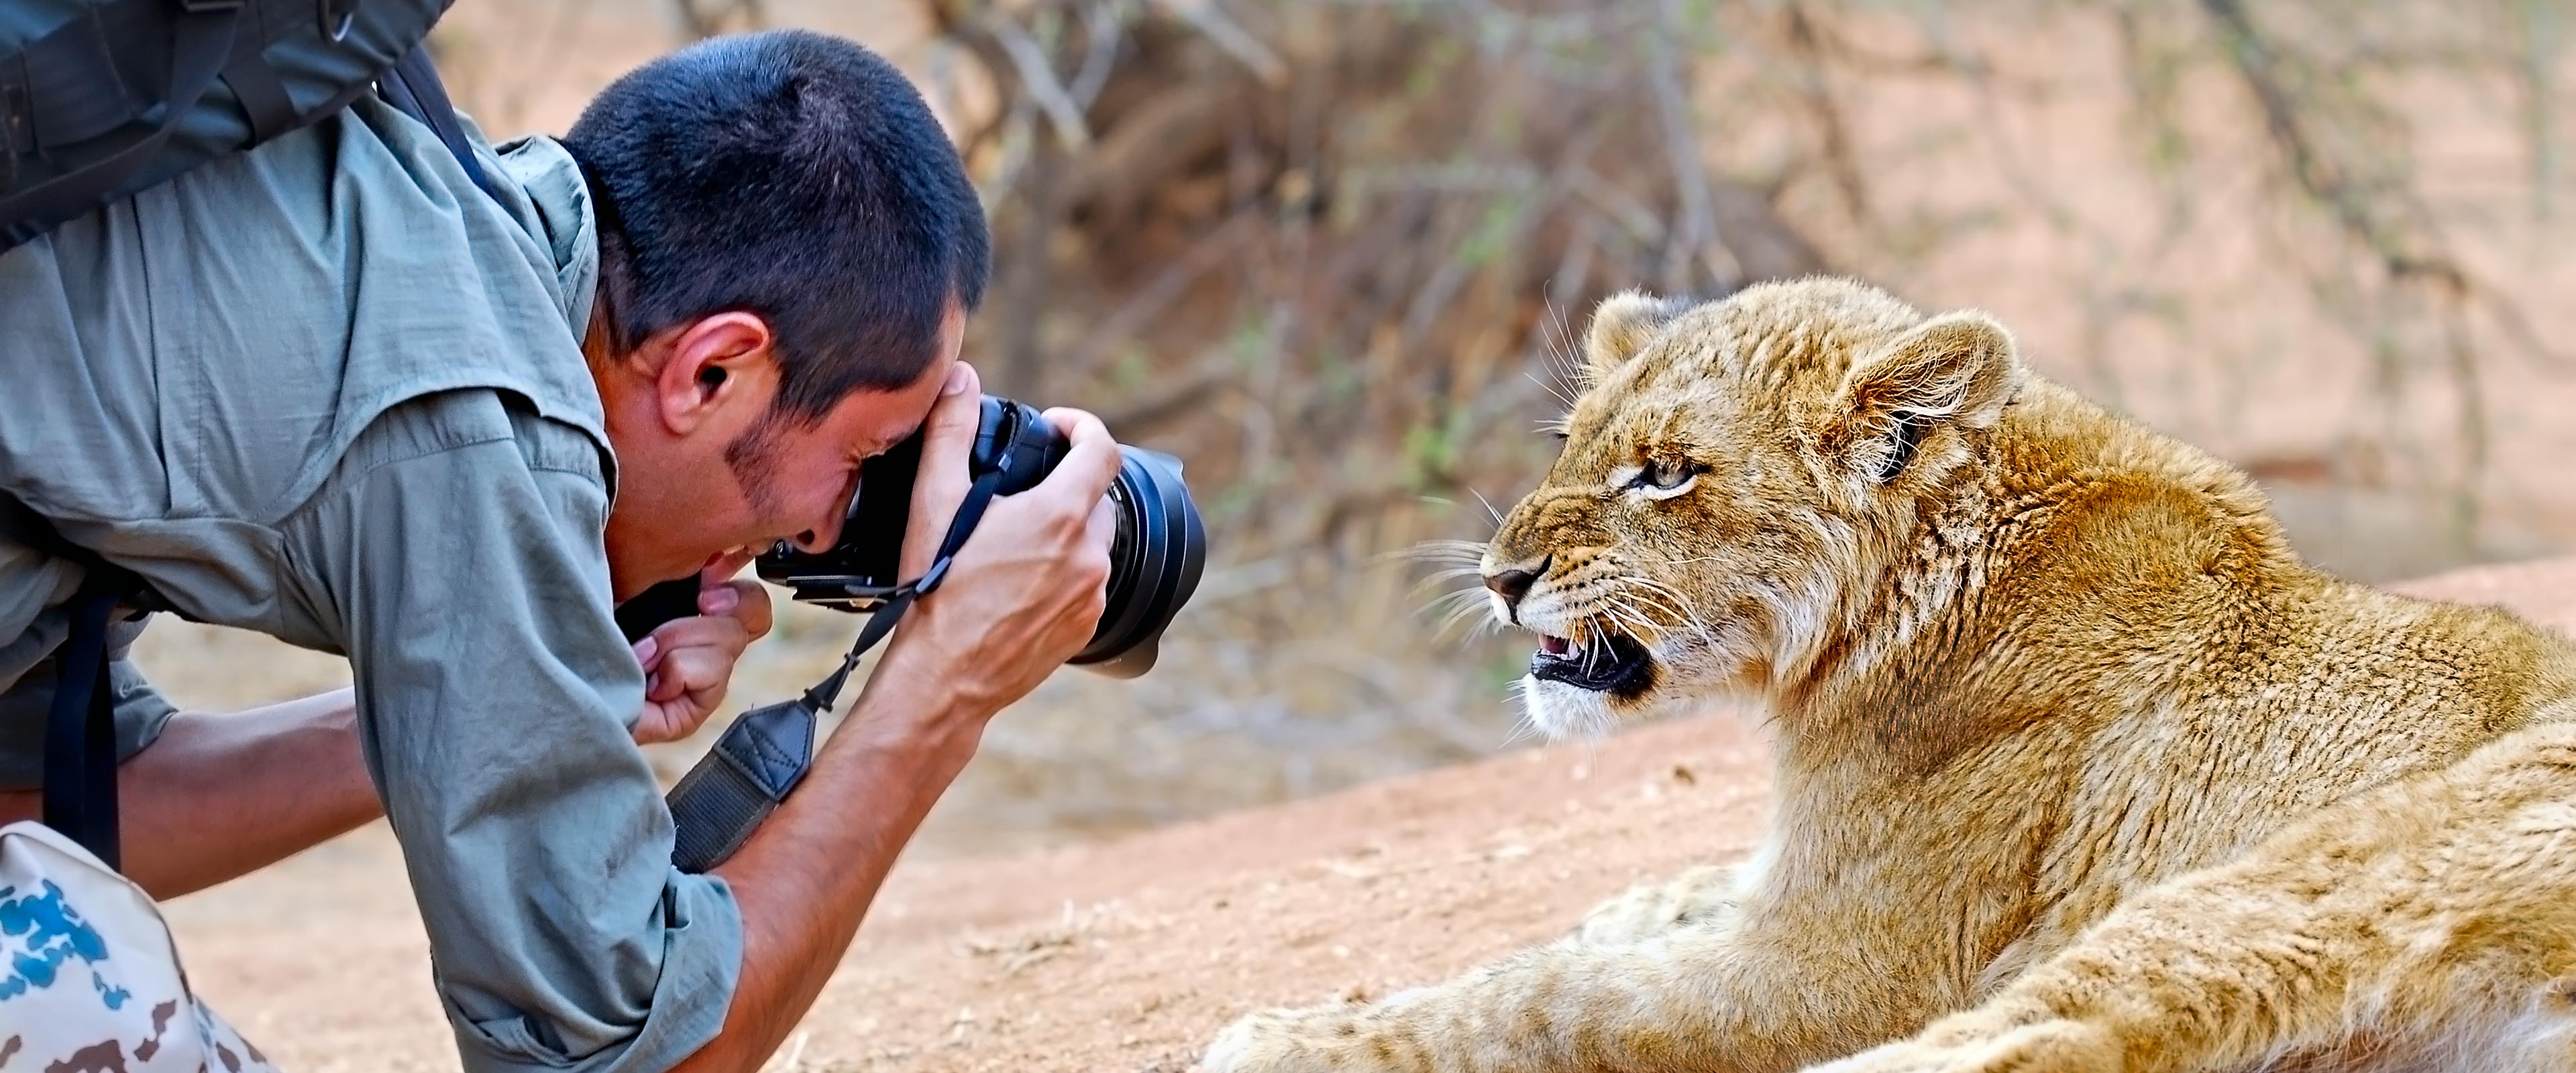 Benny Rebel fotografiert einen Löwen in Afrika aus nächster Nähe. Fotosafari